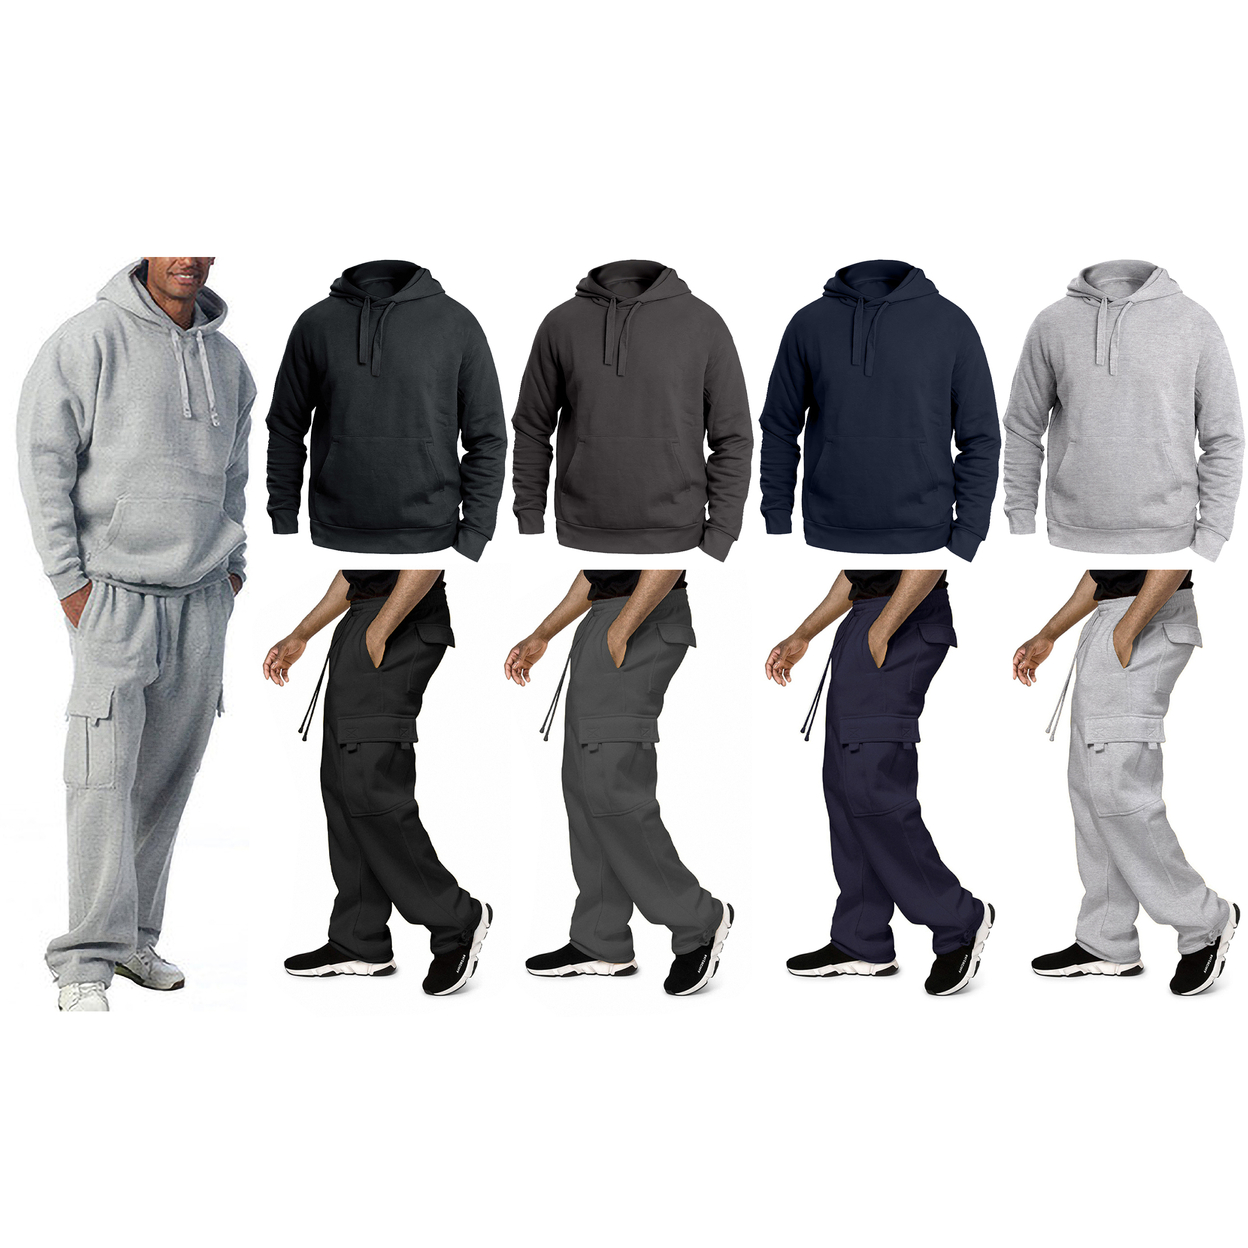 2-Pack: Men's Big & Tall Winter Warm Cozy Athletic Fleece Lined Multi-Pocket Cargo Sweatsuit - Grey, 3xl